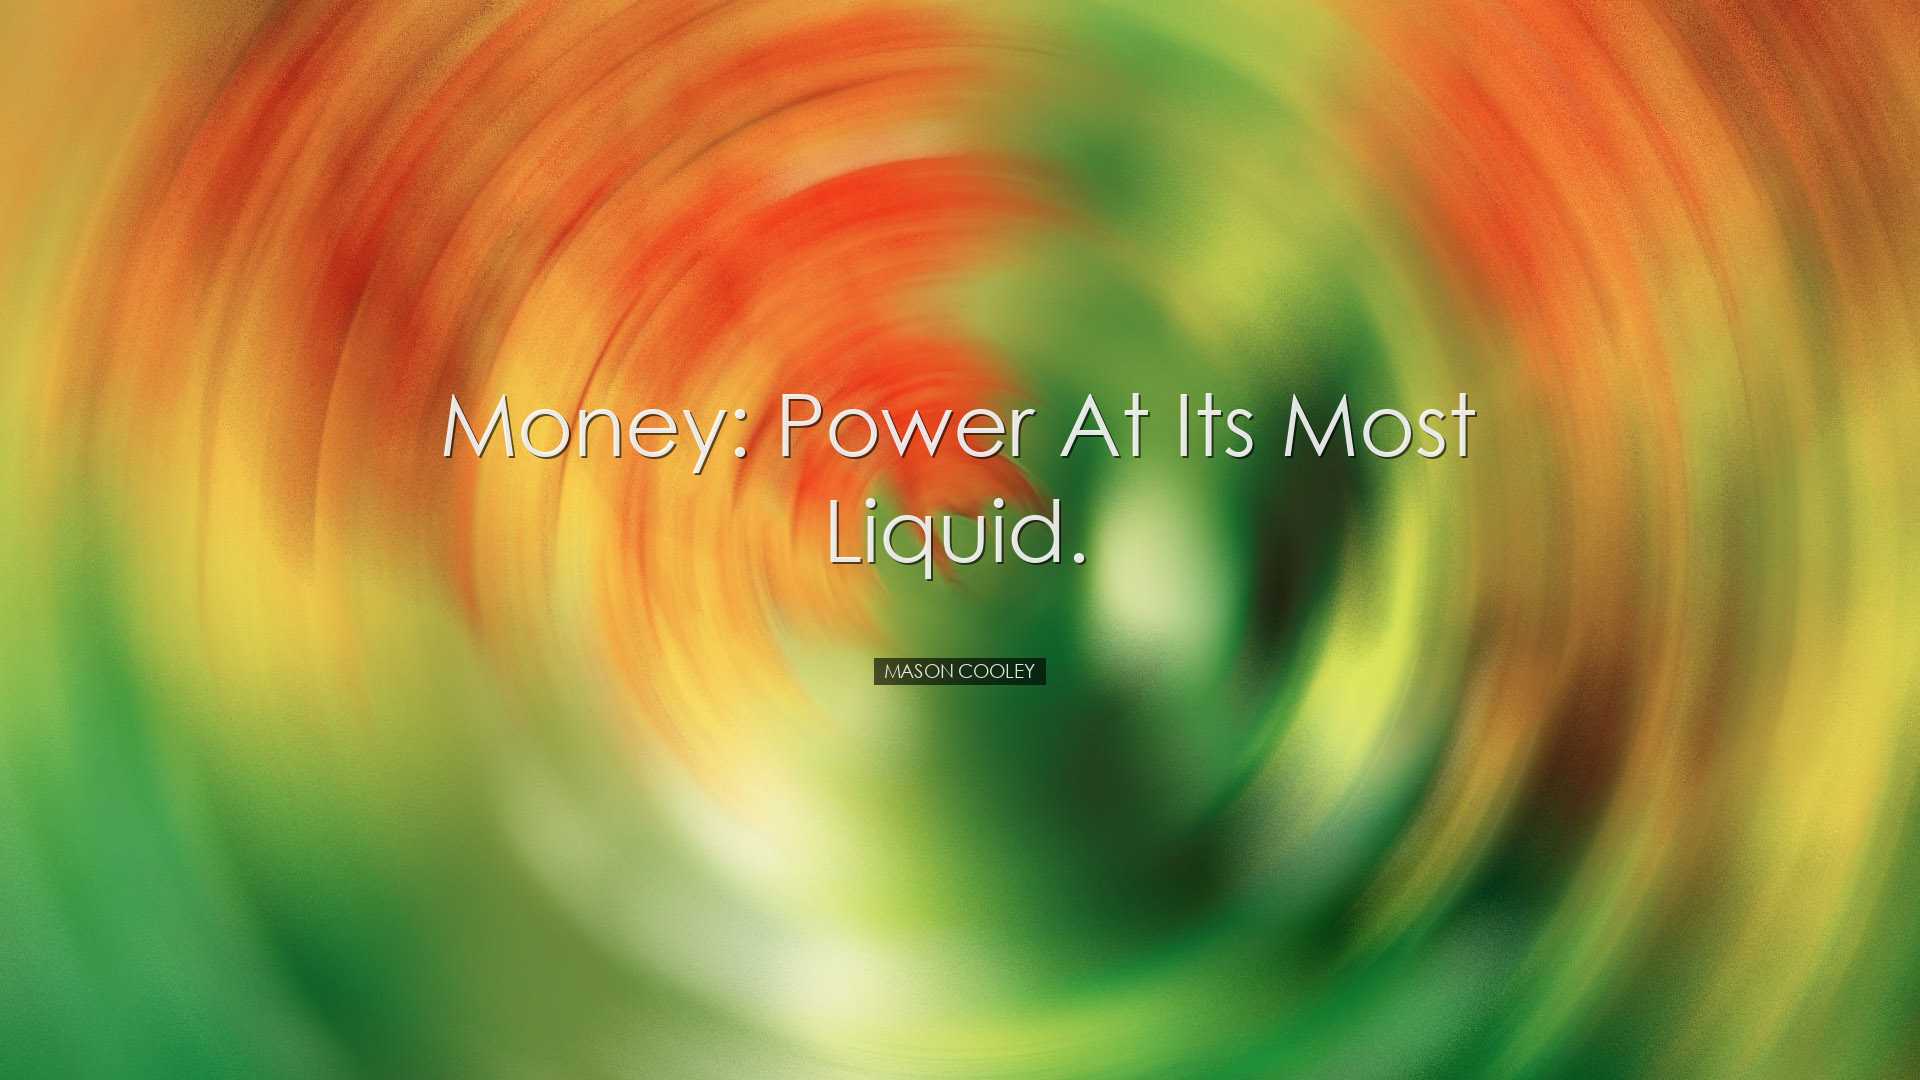 Money: power at its most liquid. - Mason Cooley